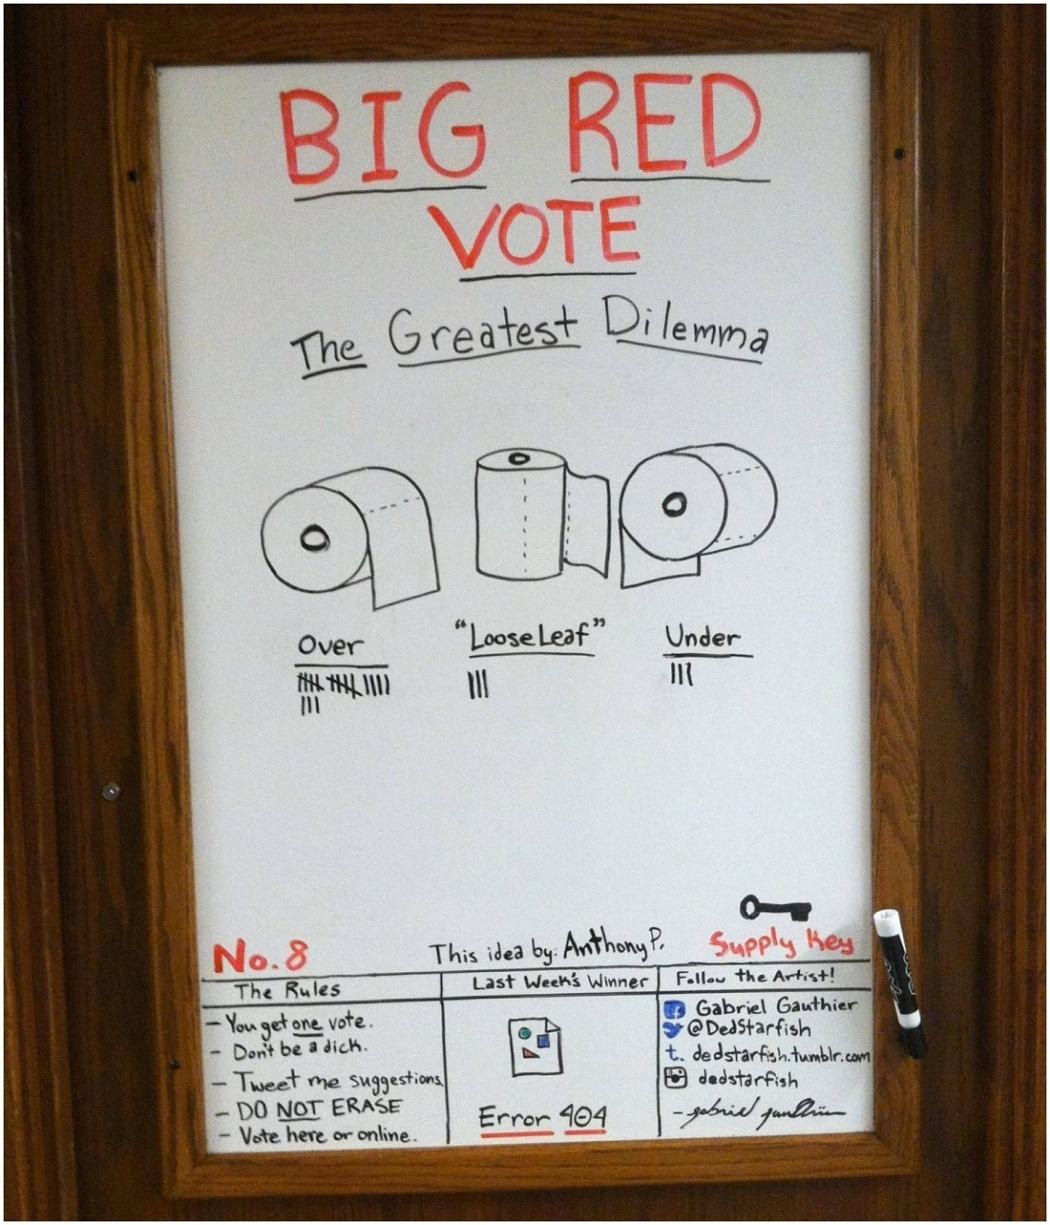 Obrázek -Big red vote-      05.10.2012